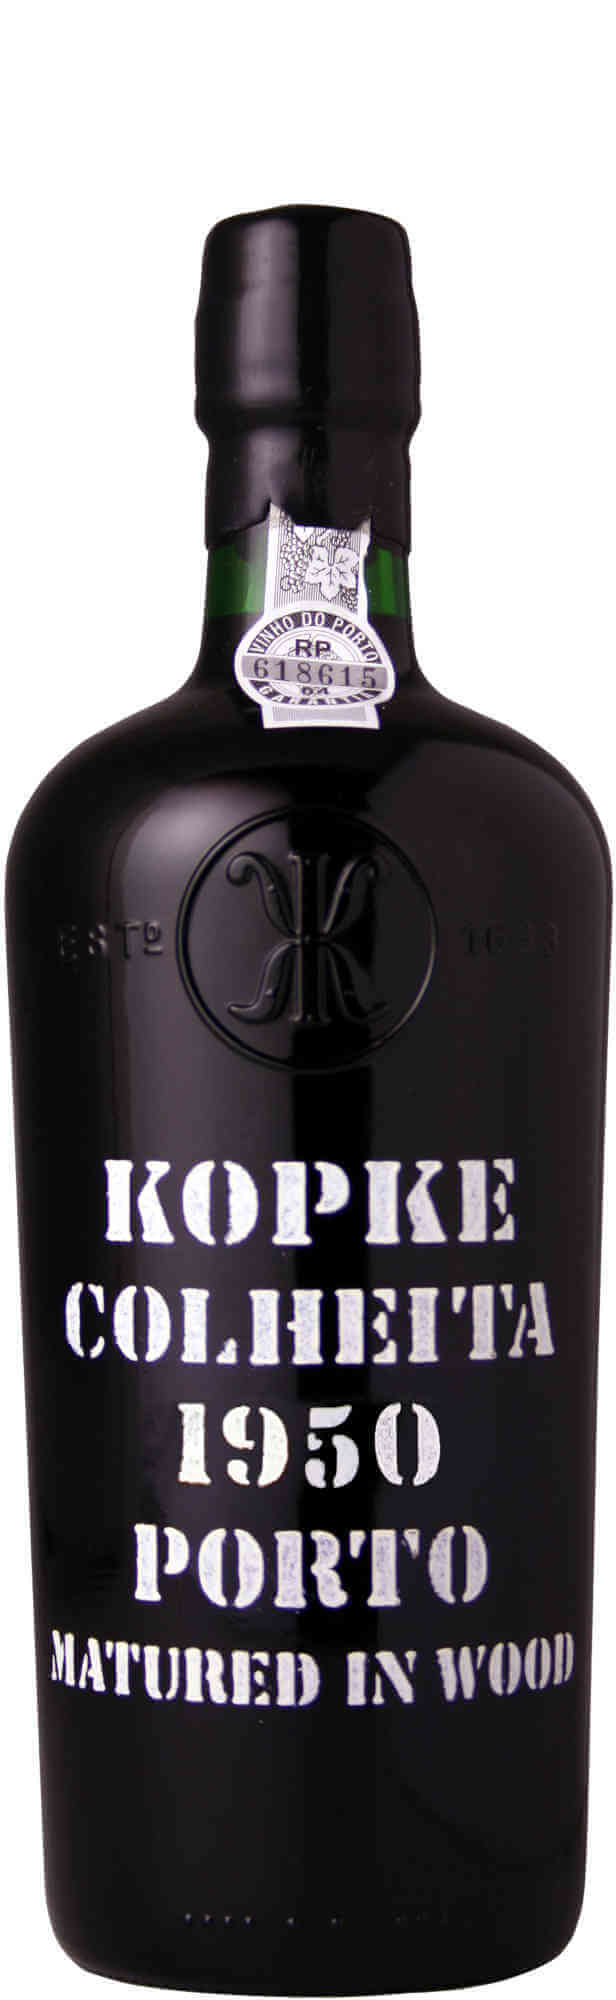 Kopke-Colheita-Port-1950